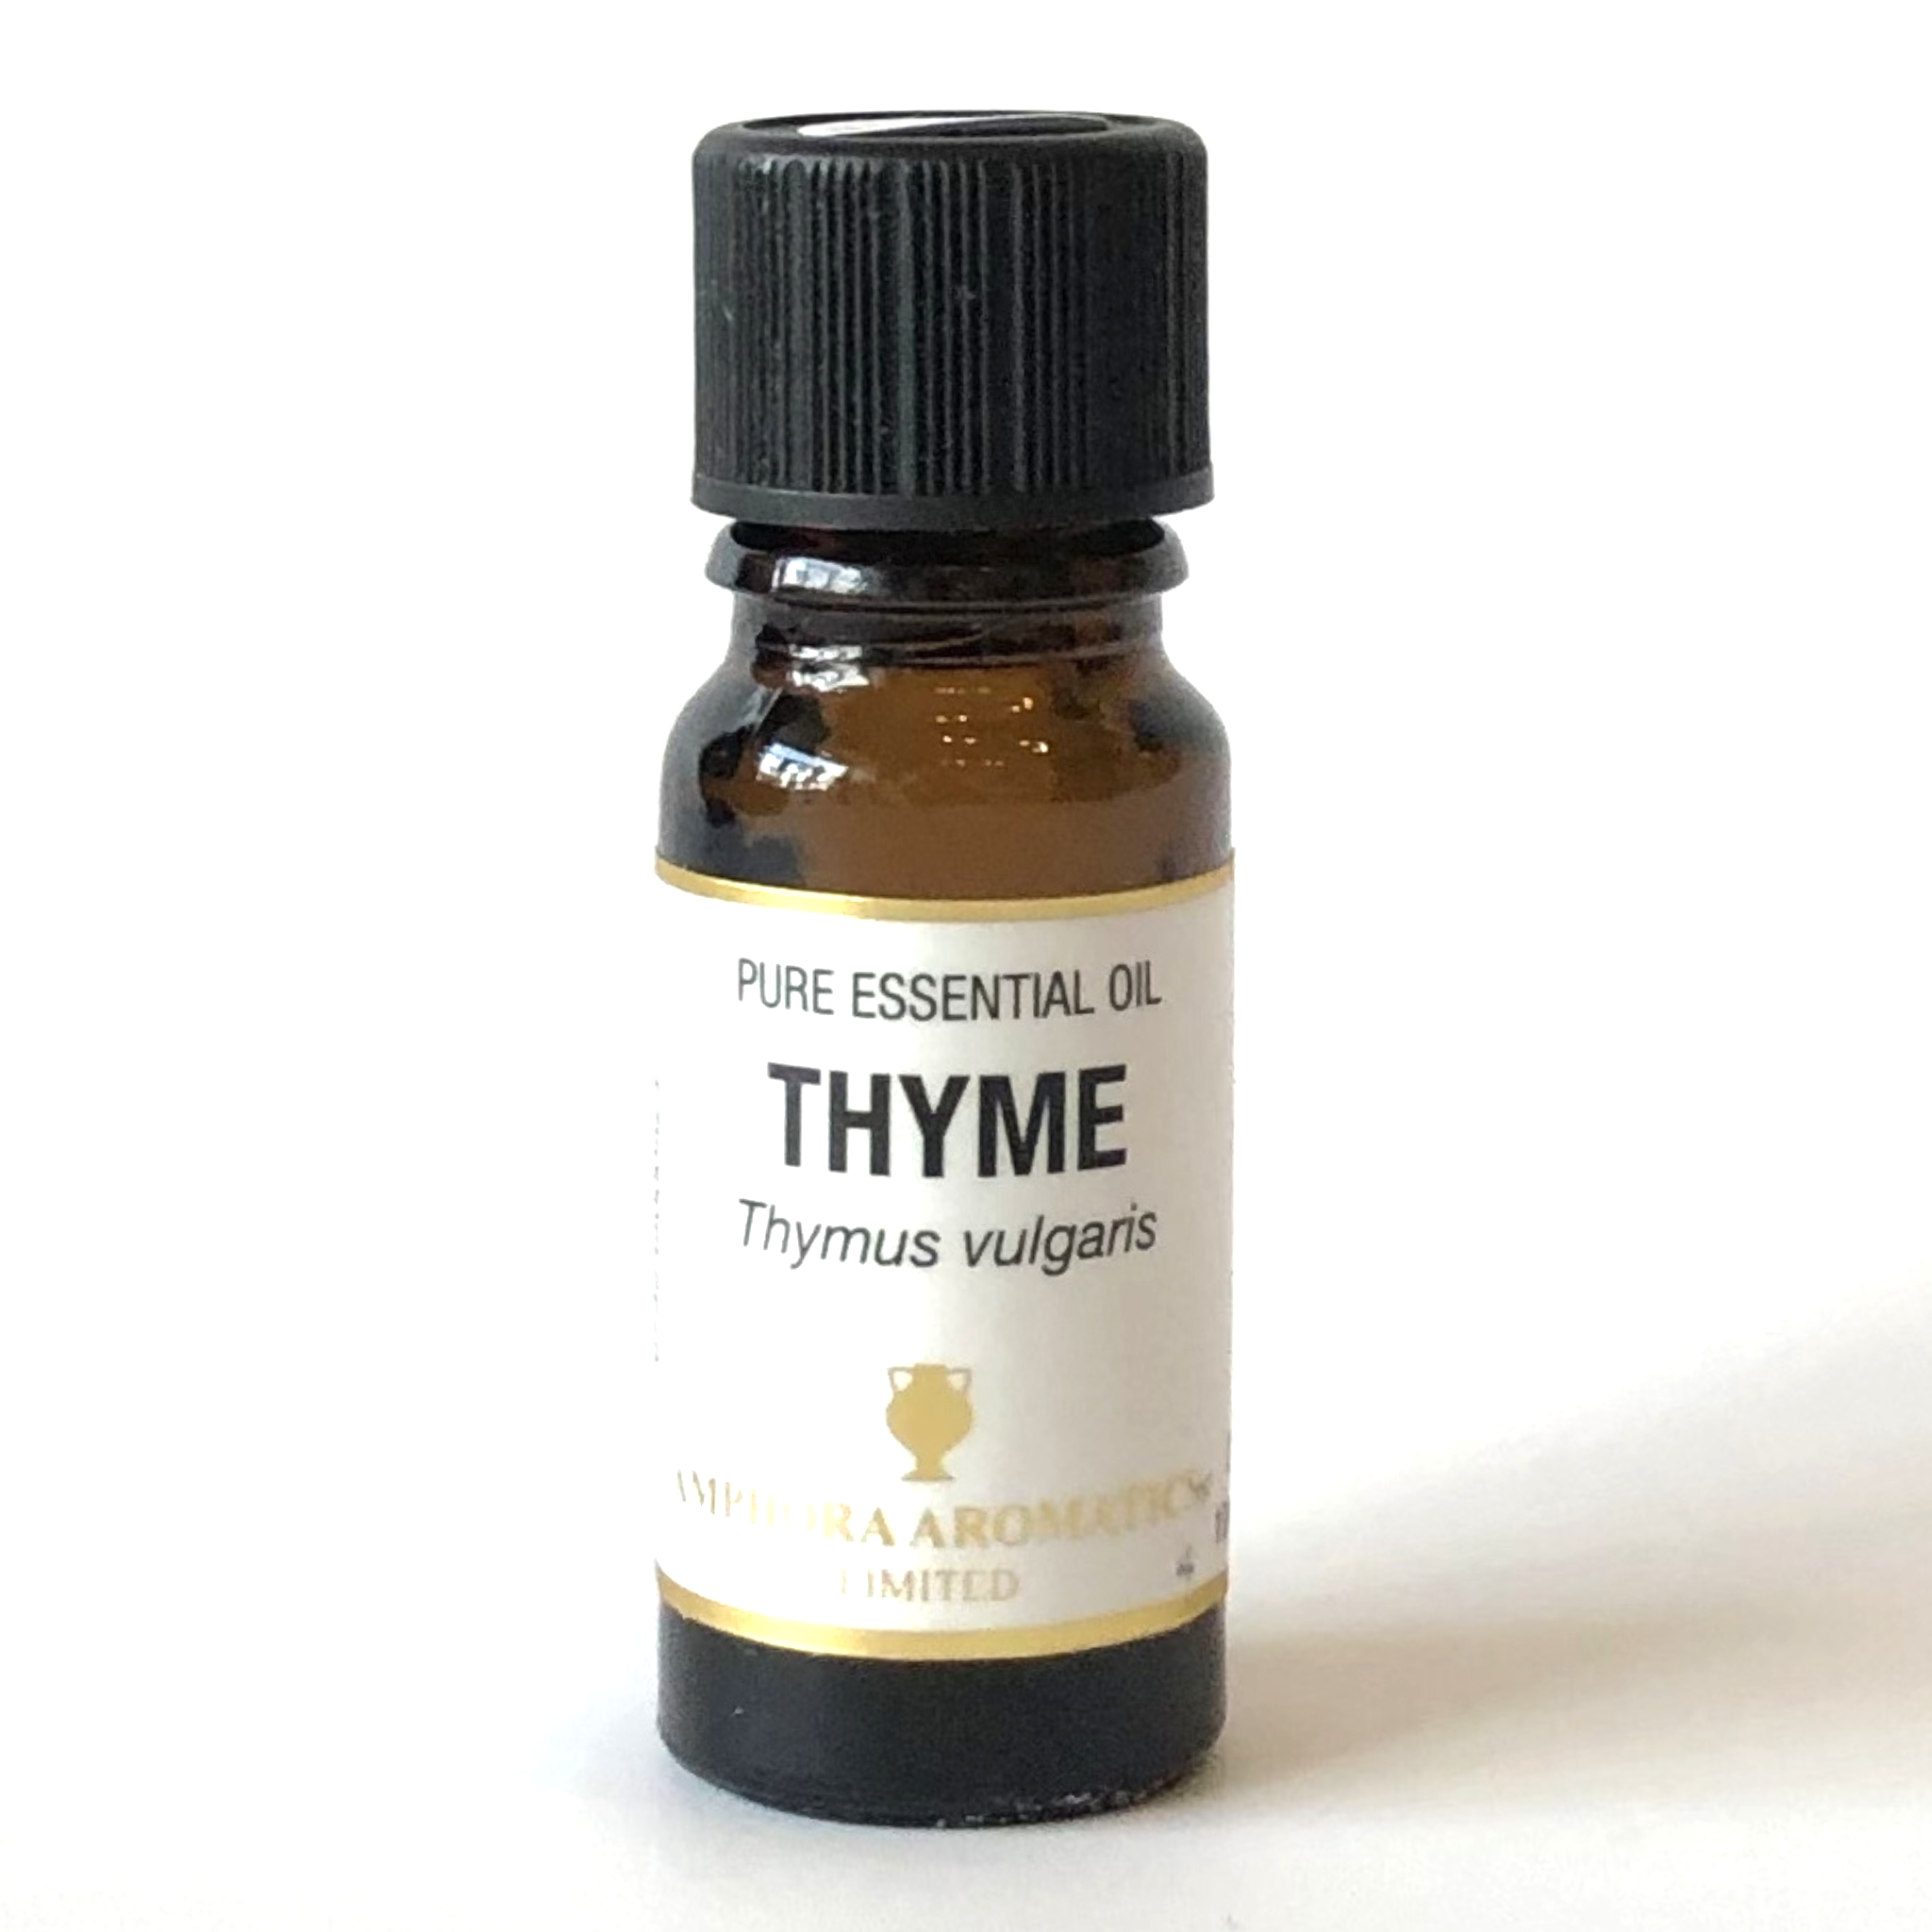 Thyme Essential Oil 10ml